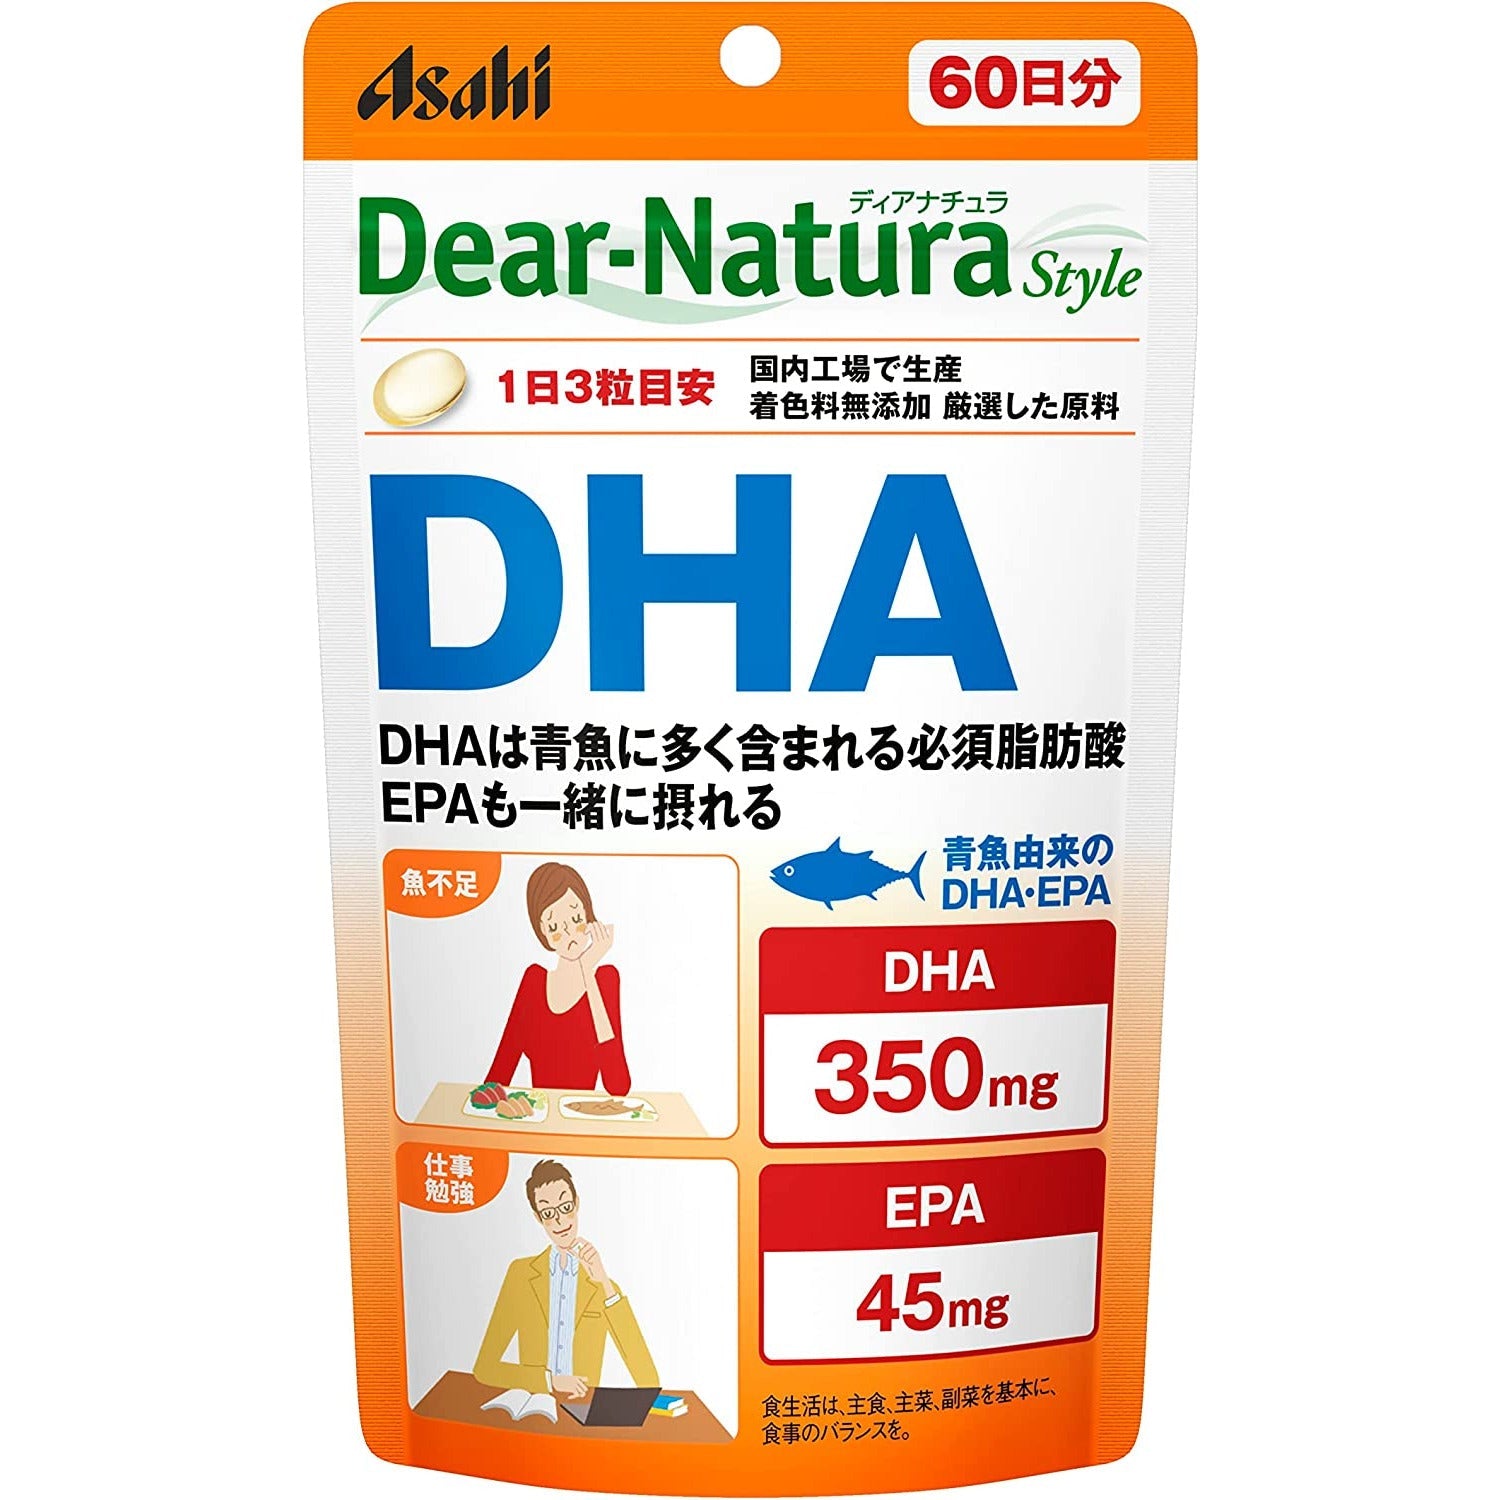 【數量限定特價】Asahi朝日 Dear Natura style系列 DHA 含EPA - CosmeBear小熊日本藥妝For台灣